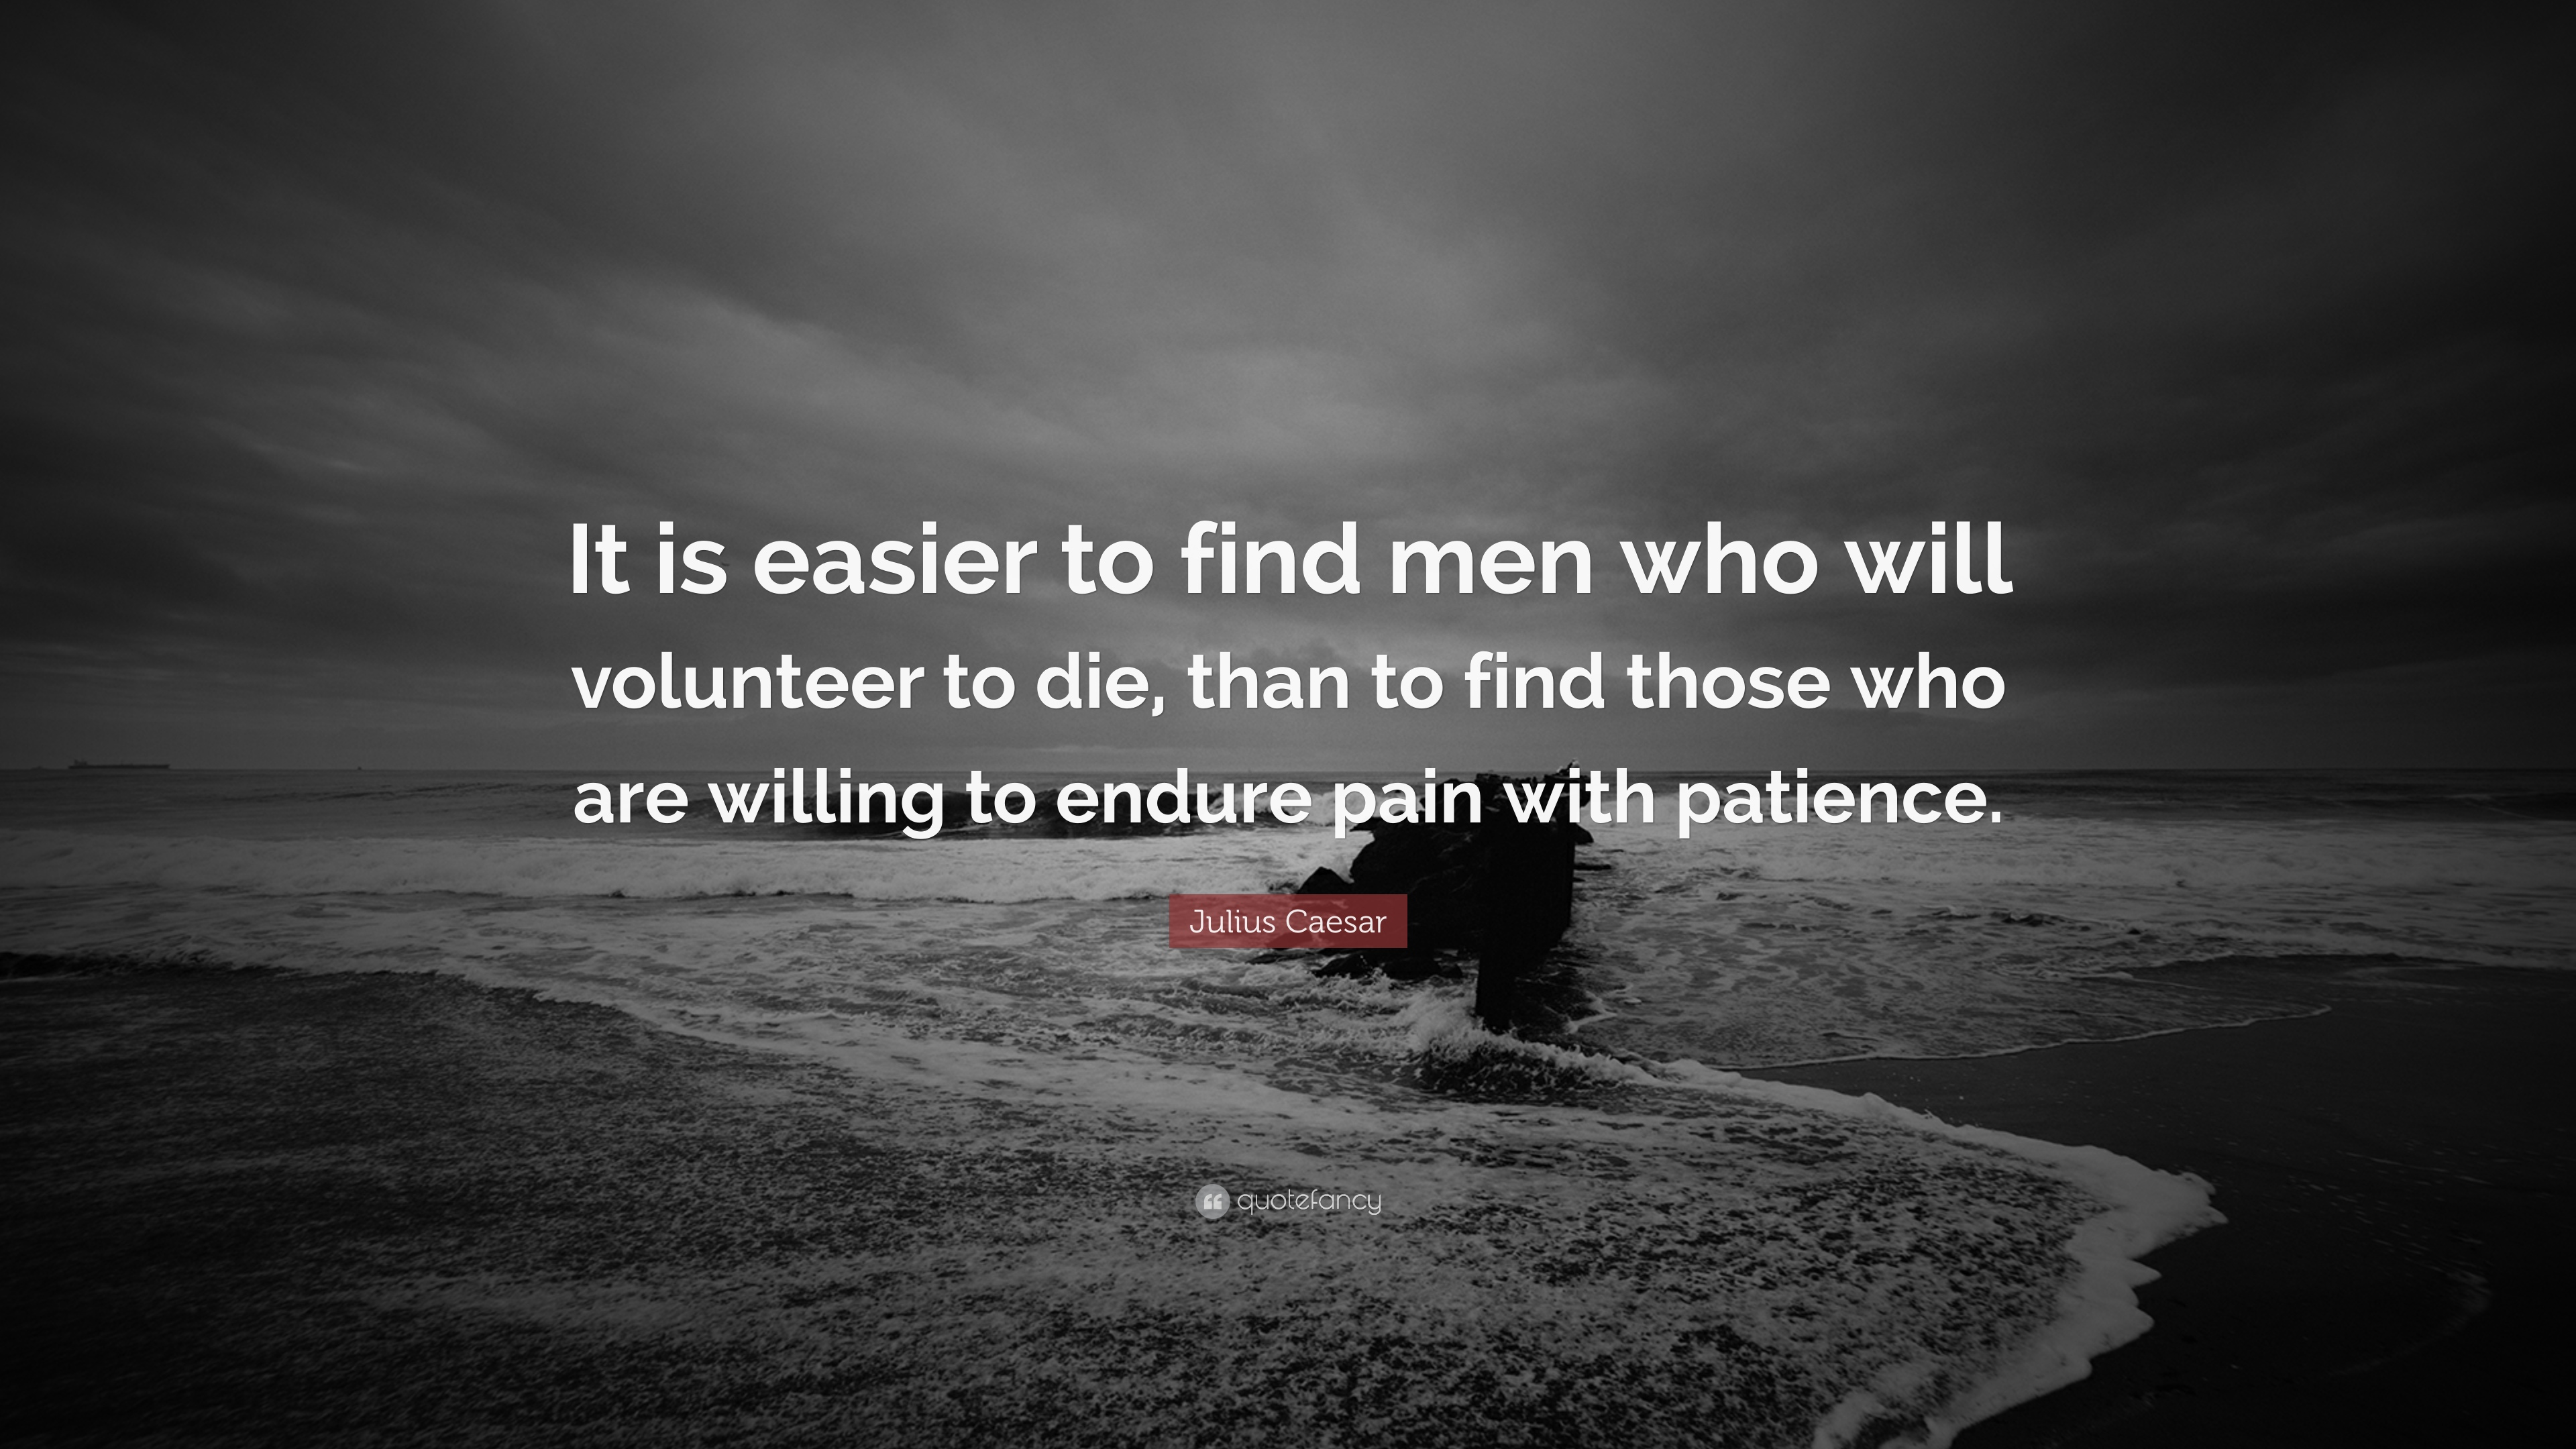 Julius Caesar Quote: “It is easier to find men who will volunteer to